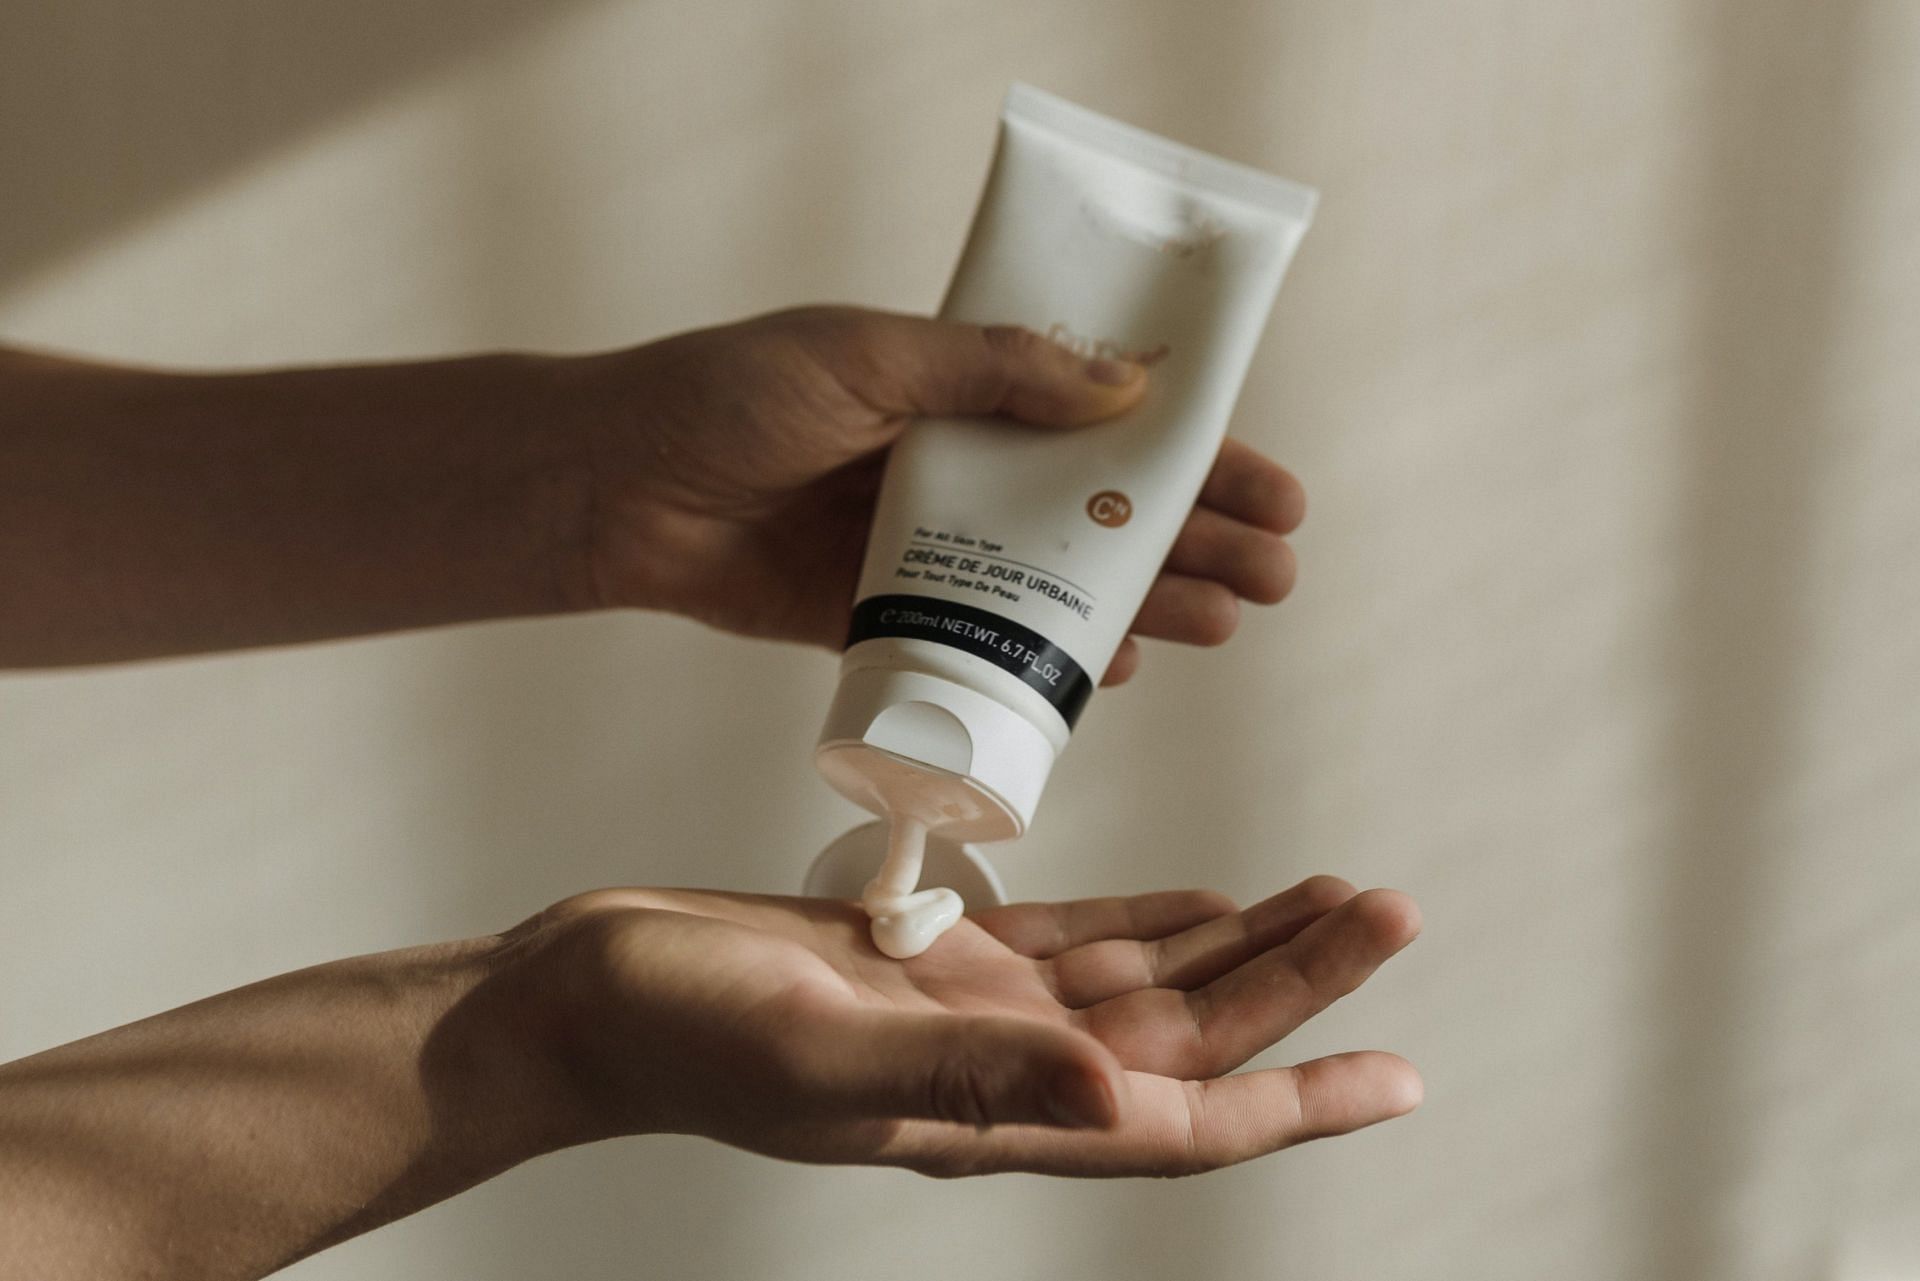 Sulfur for acne: Does it work? (Image via Pexels / Arina Krasnikova)